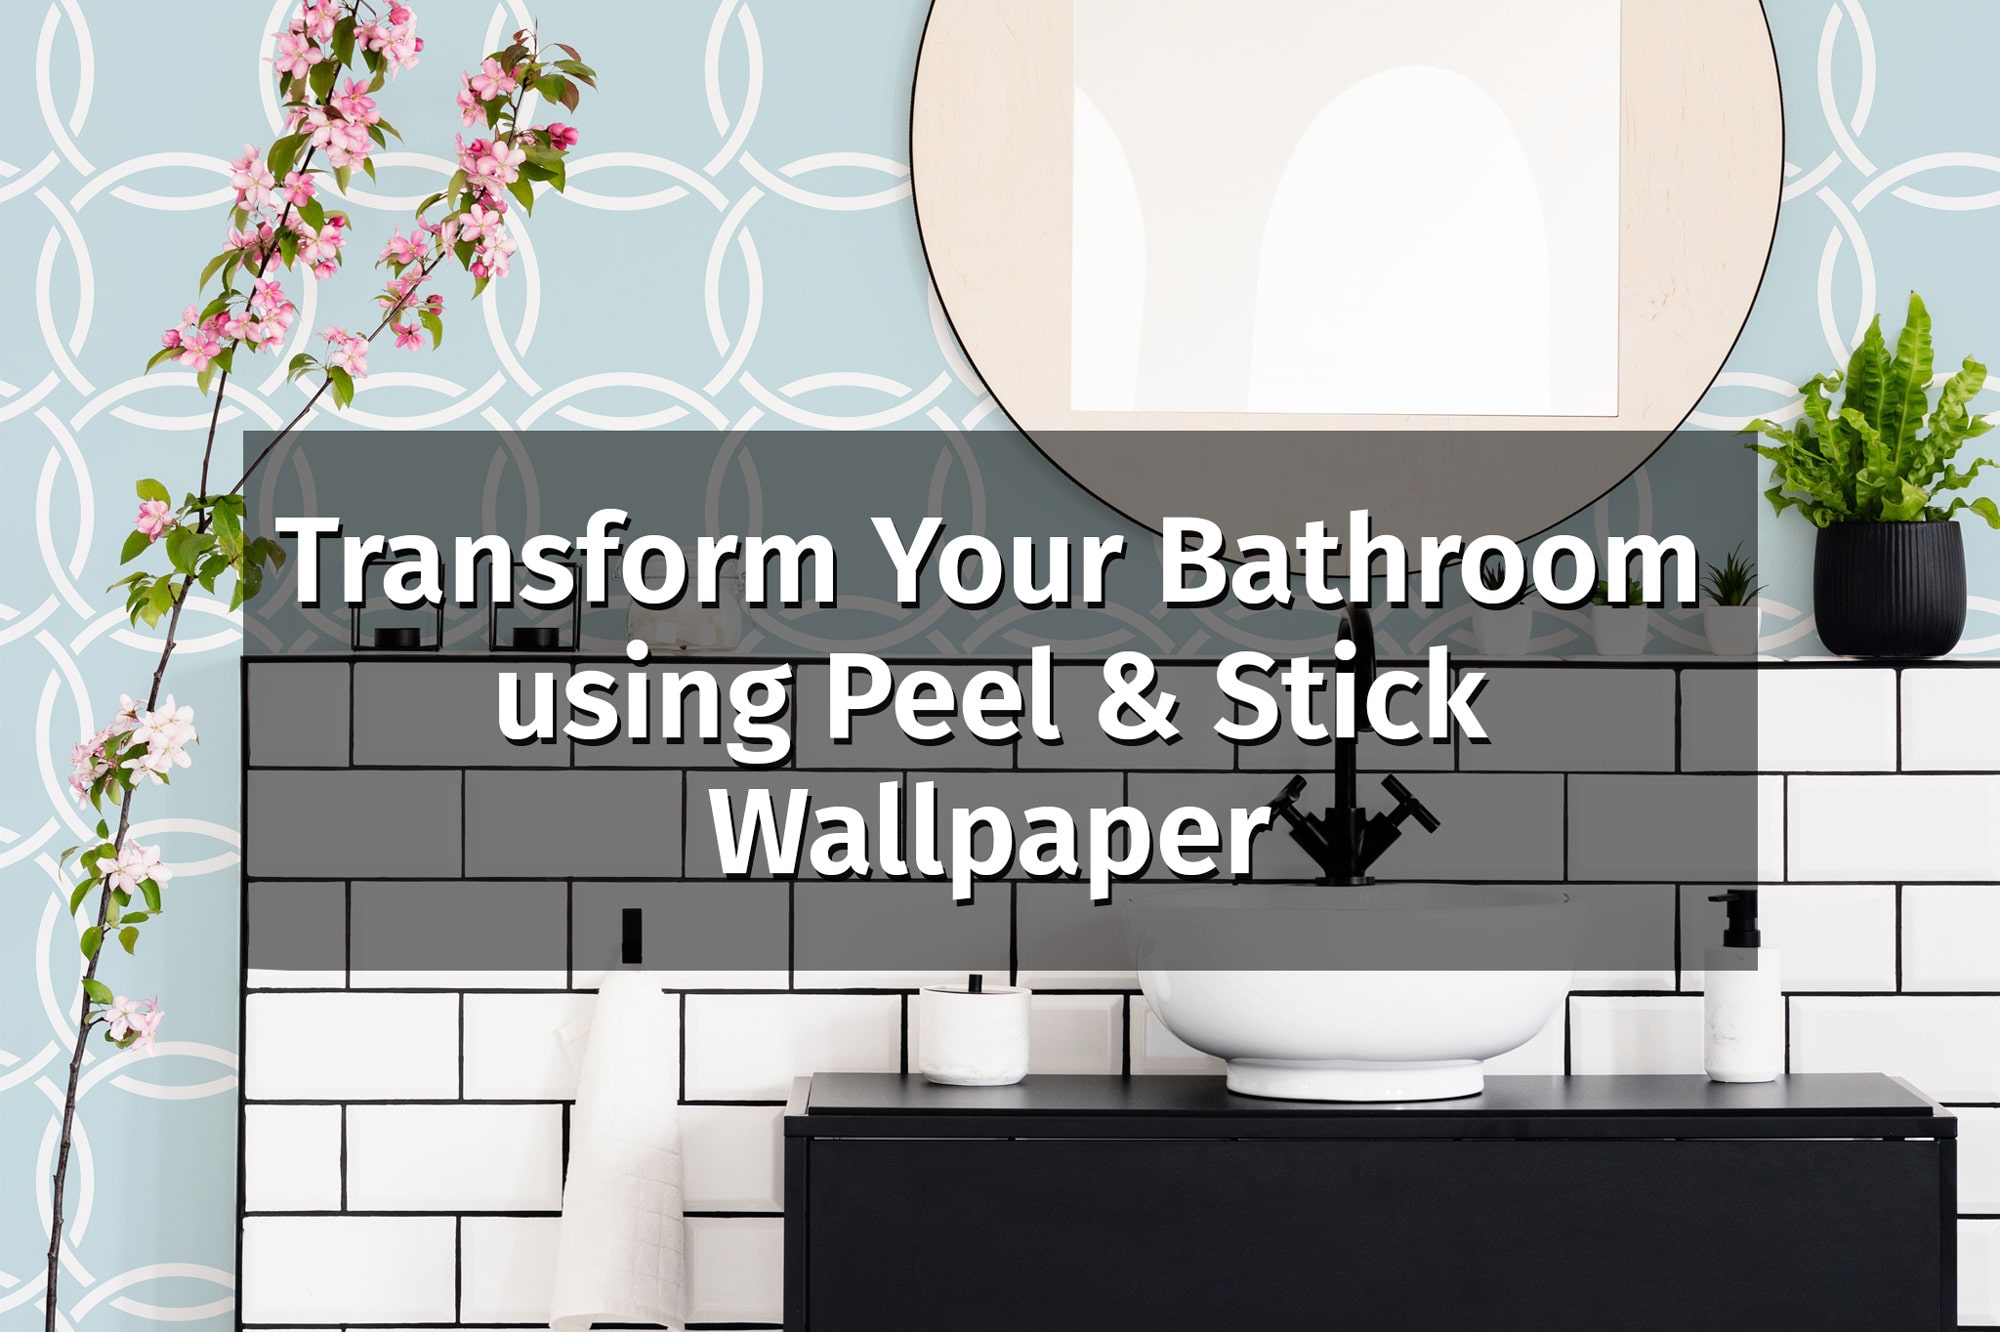 Transform Your Bathroom using Peel & Stick Wallpaper - Fancy Walls